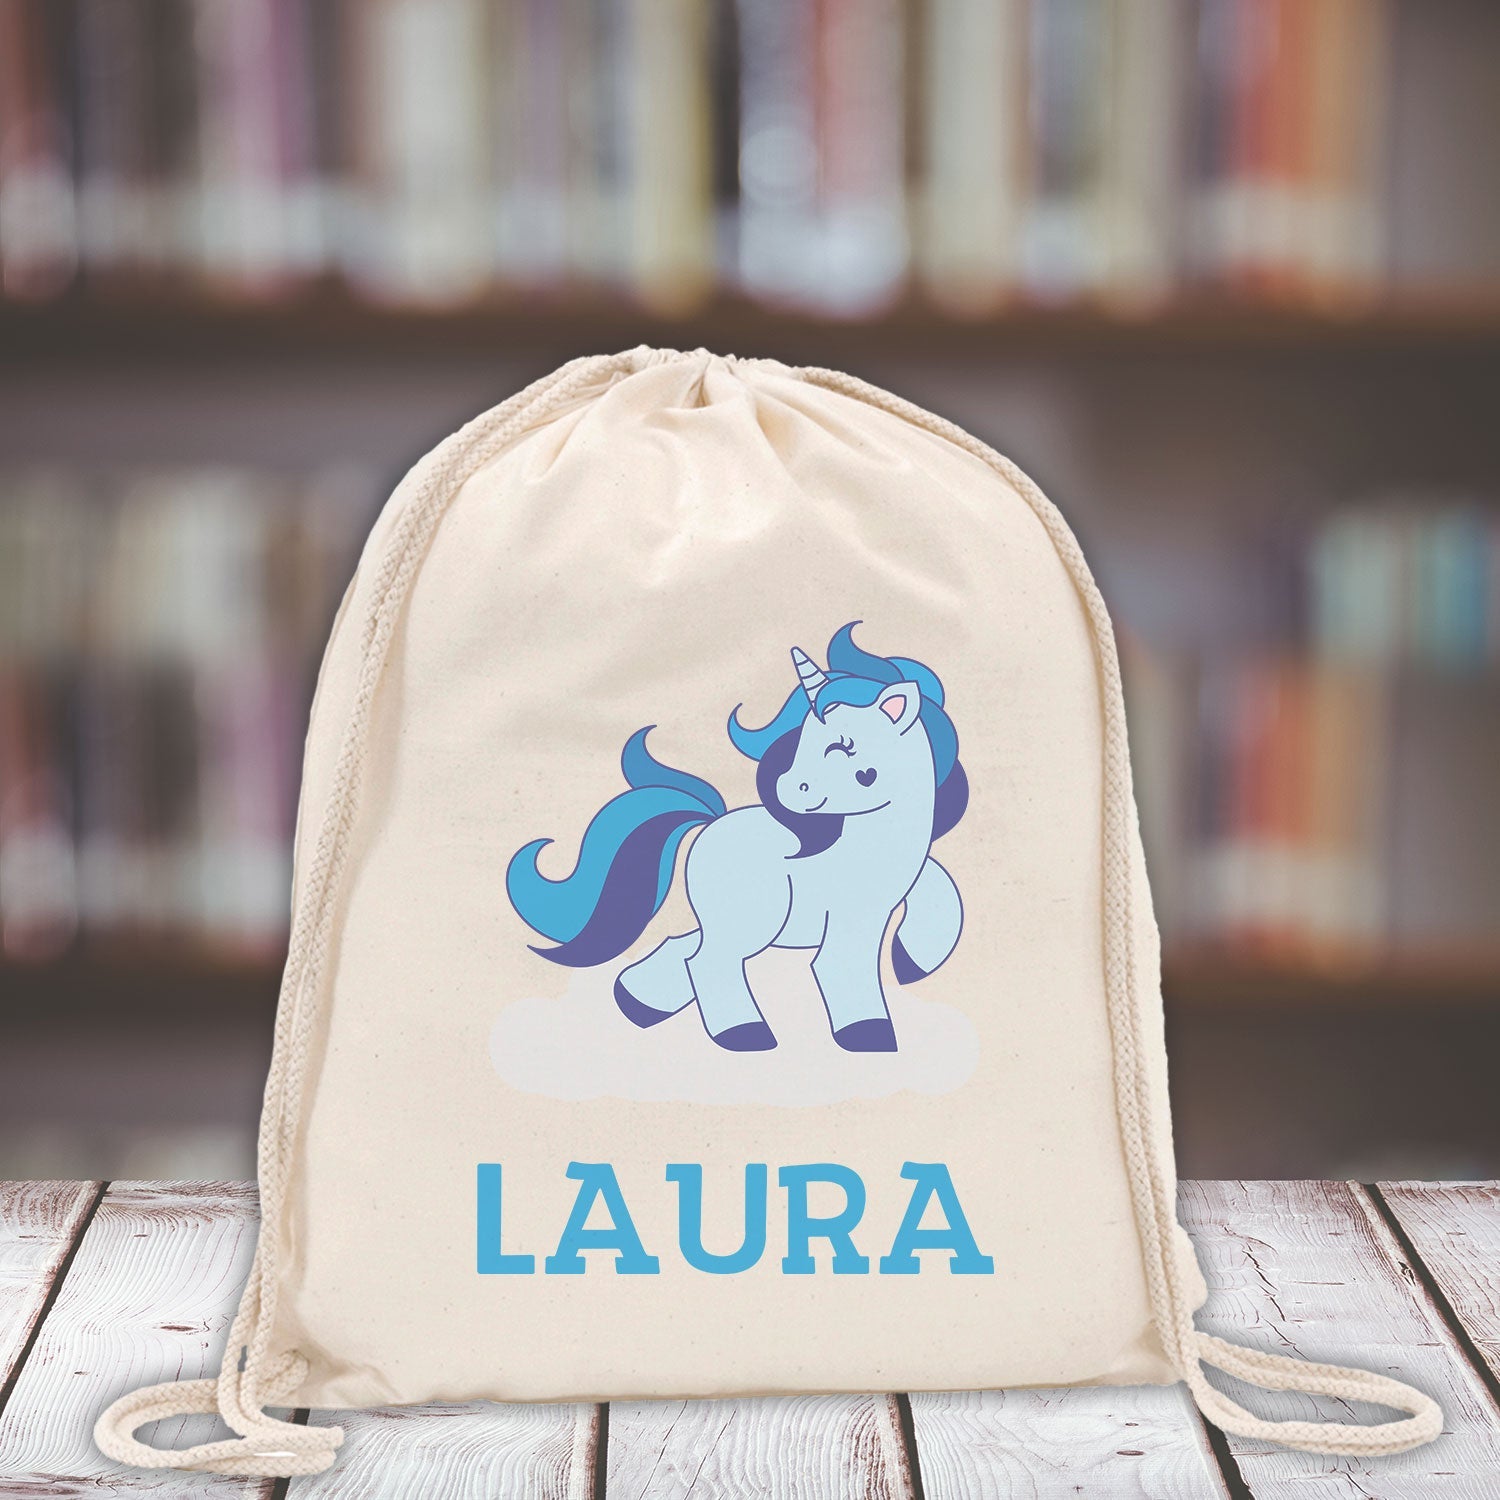 Personalised Kids Gym Bag - Blue Unicorn